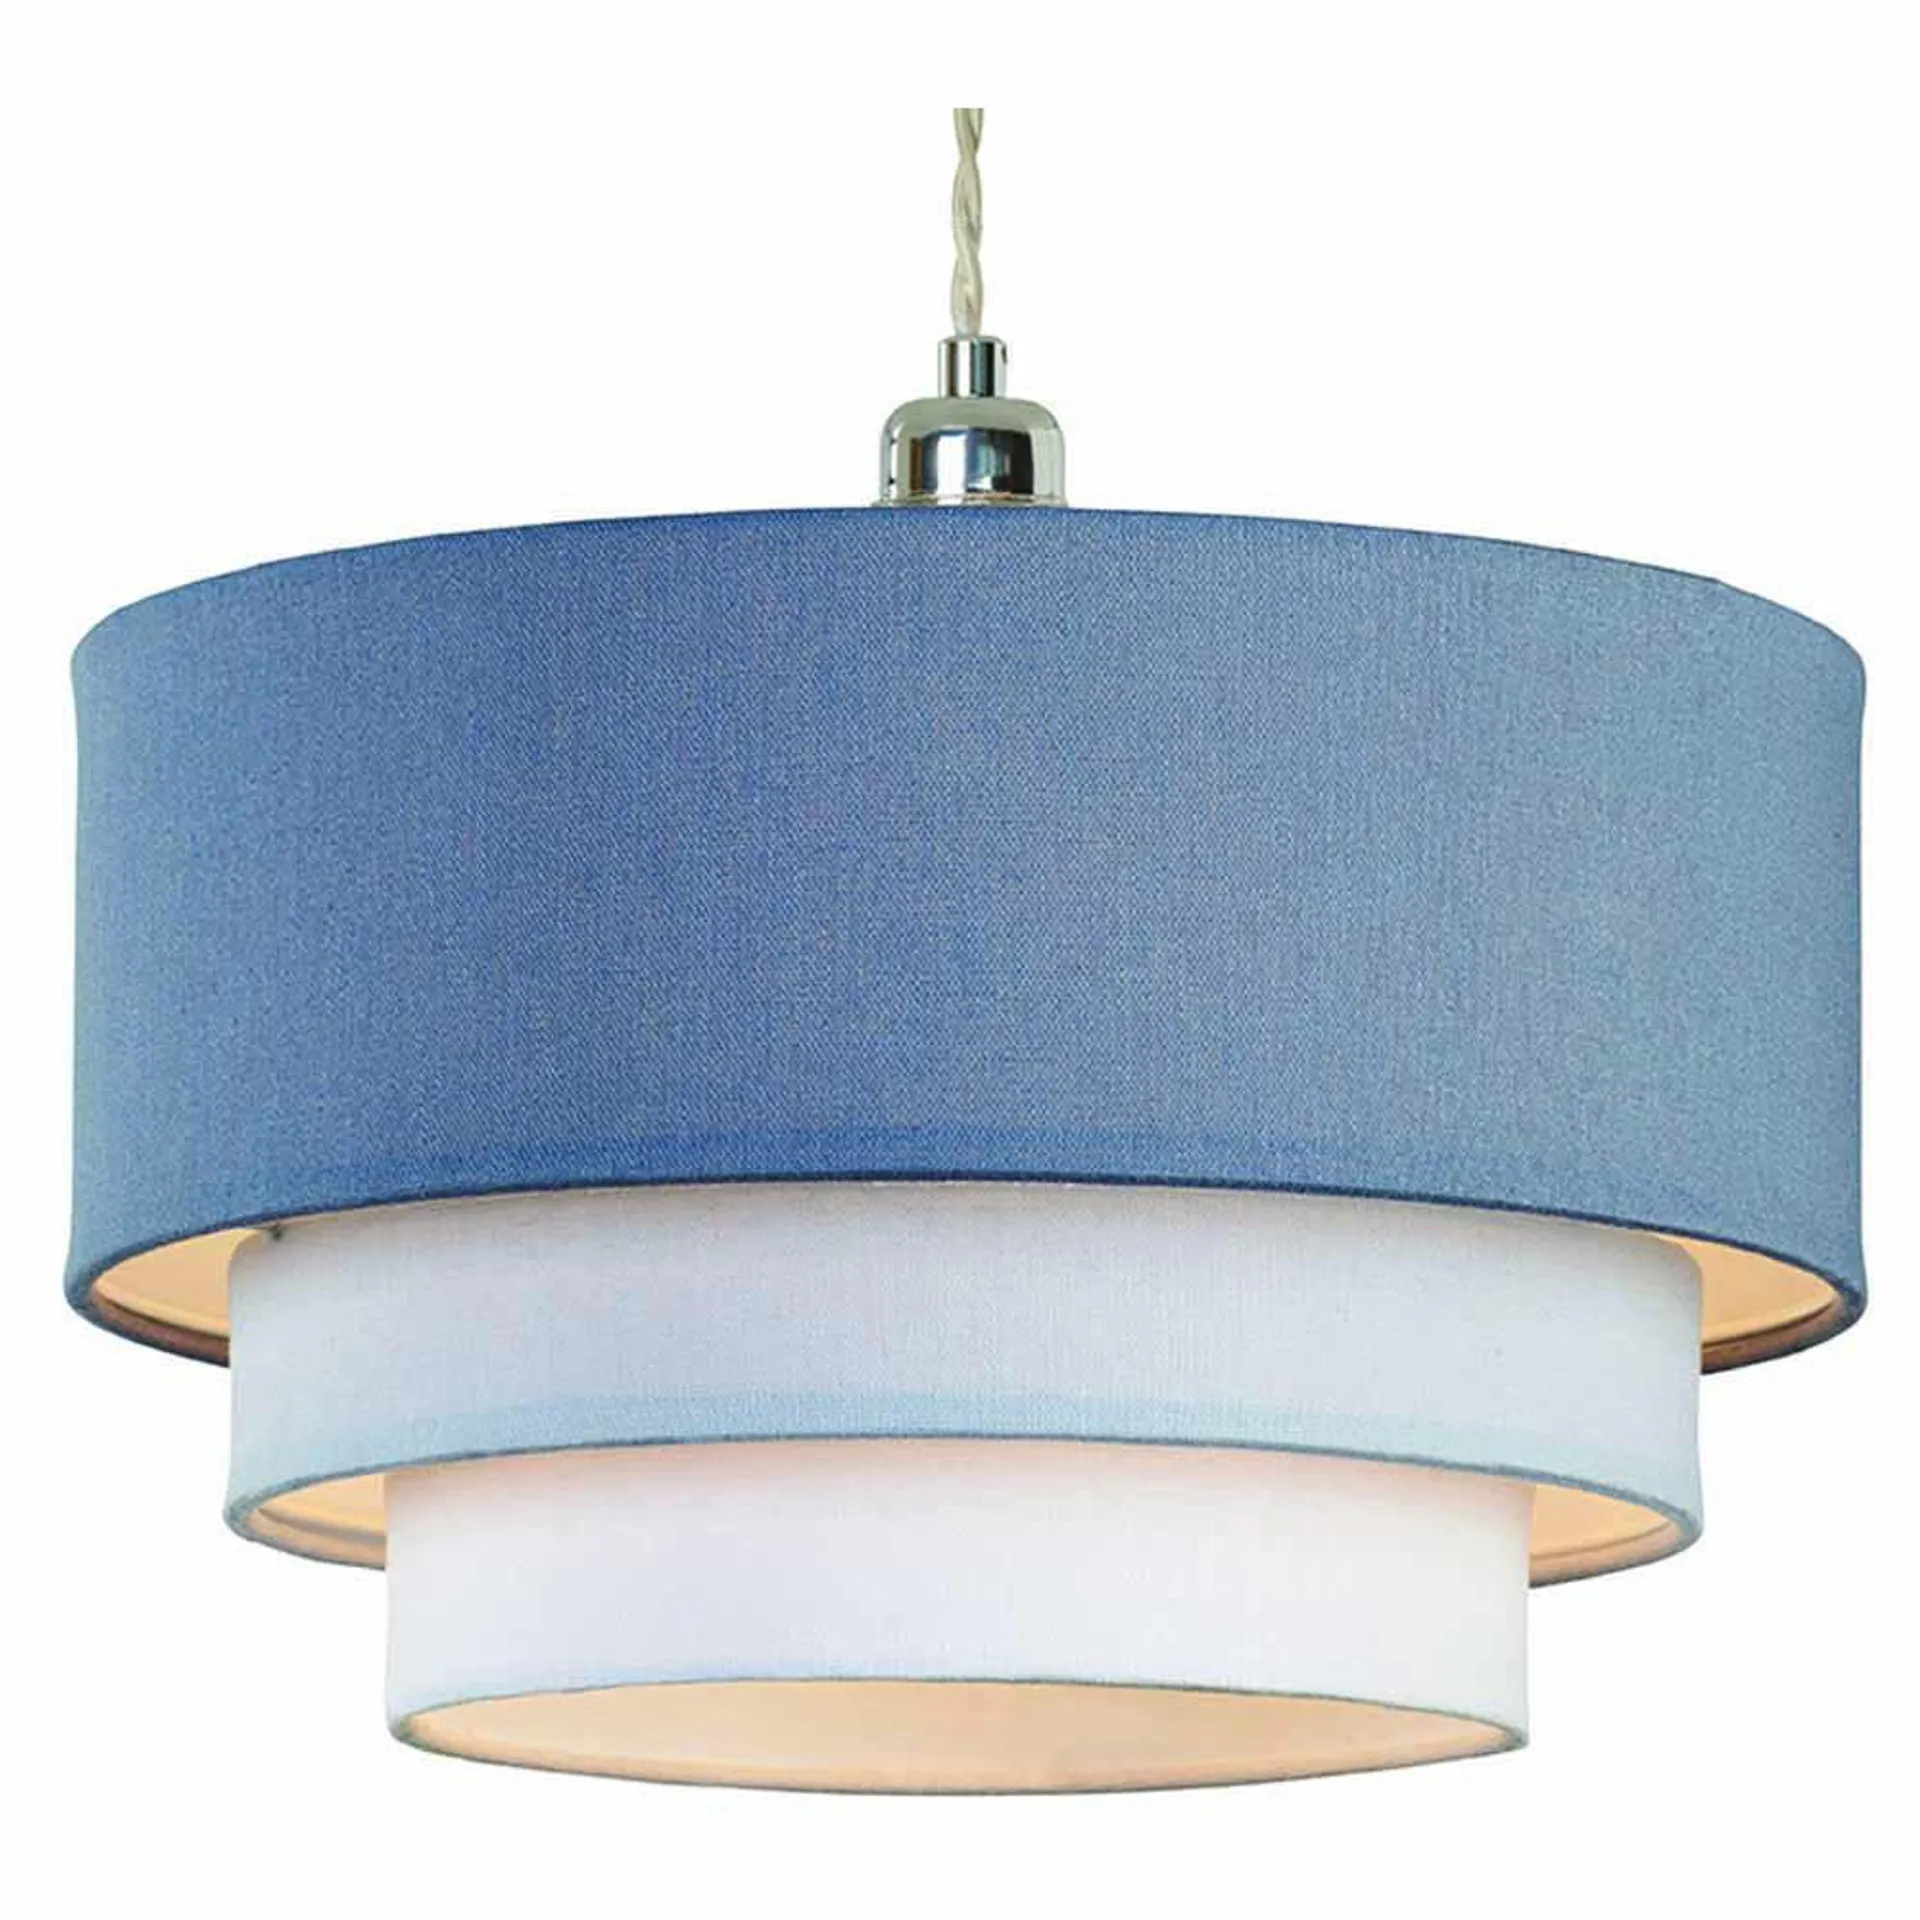 The Lighting and Interiors Denim Blue 3 Tier Pendant Shade